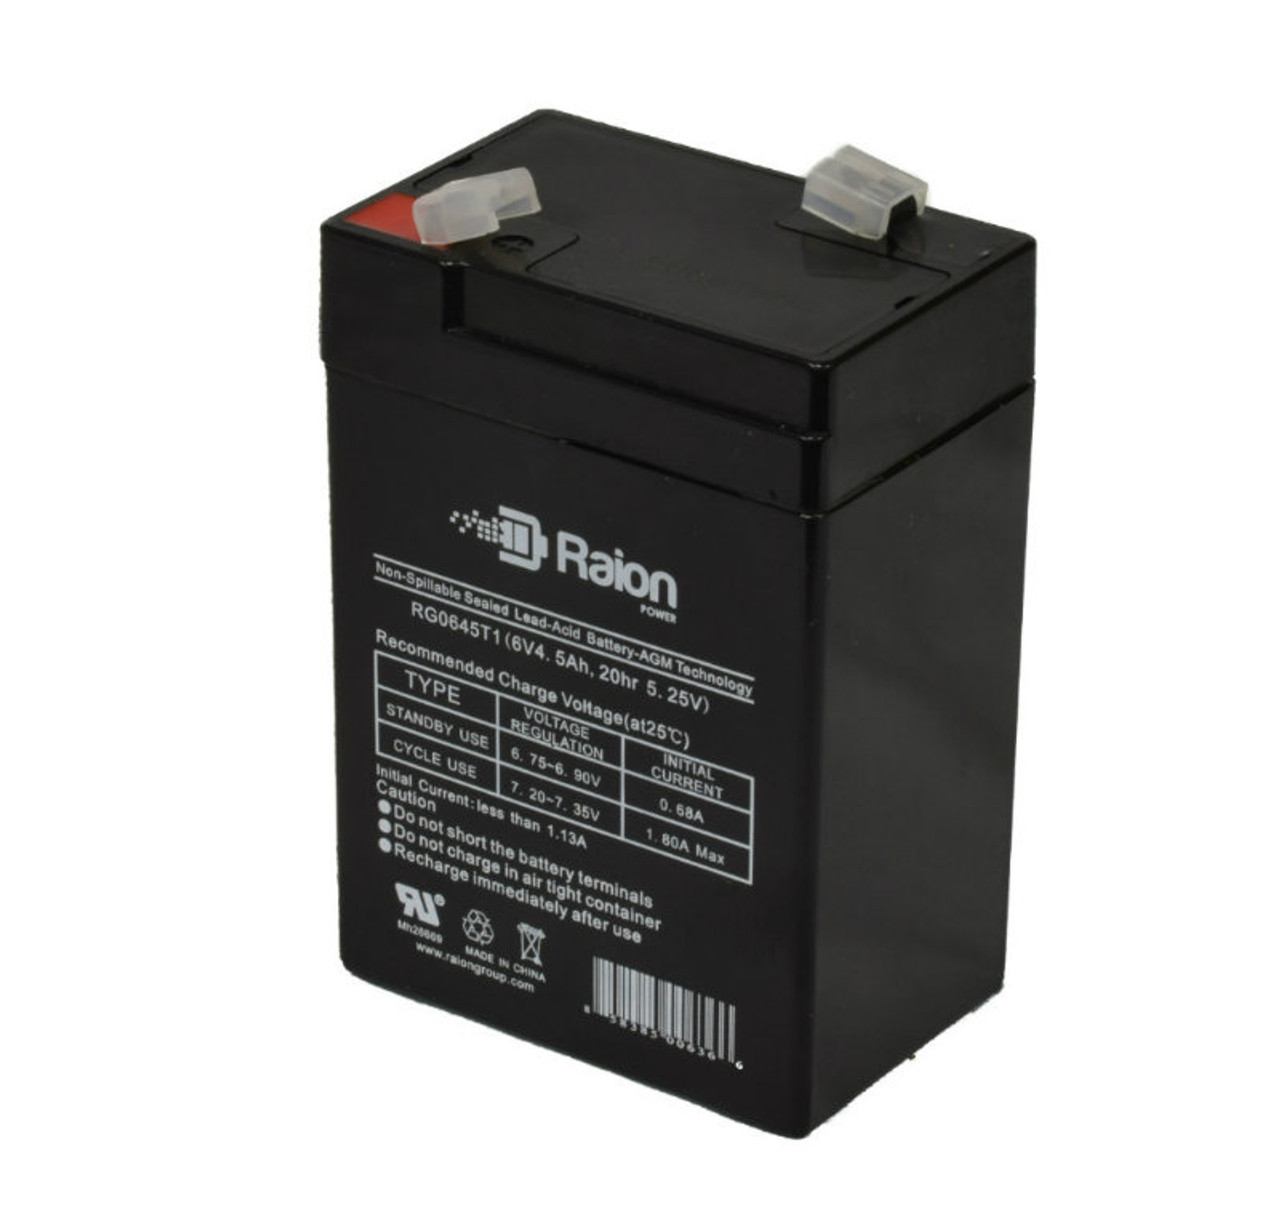 Raion Power RG0645T1 6V 4.5Ah Replacement Spotlight Battery Cartridge for Dorcy Spotlight 41-1053